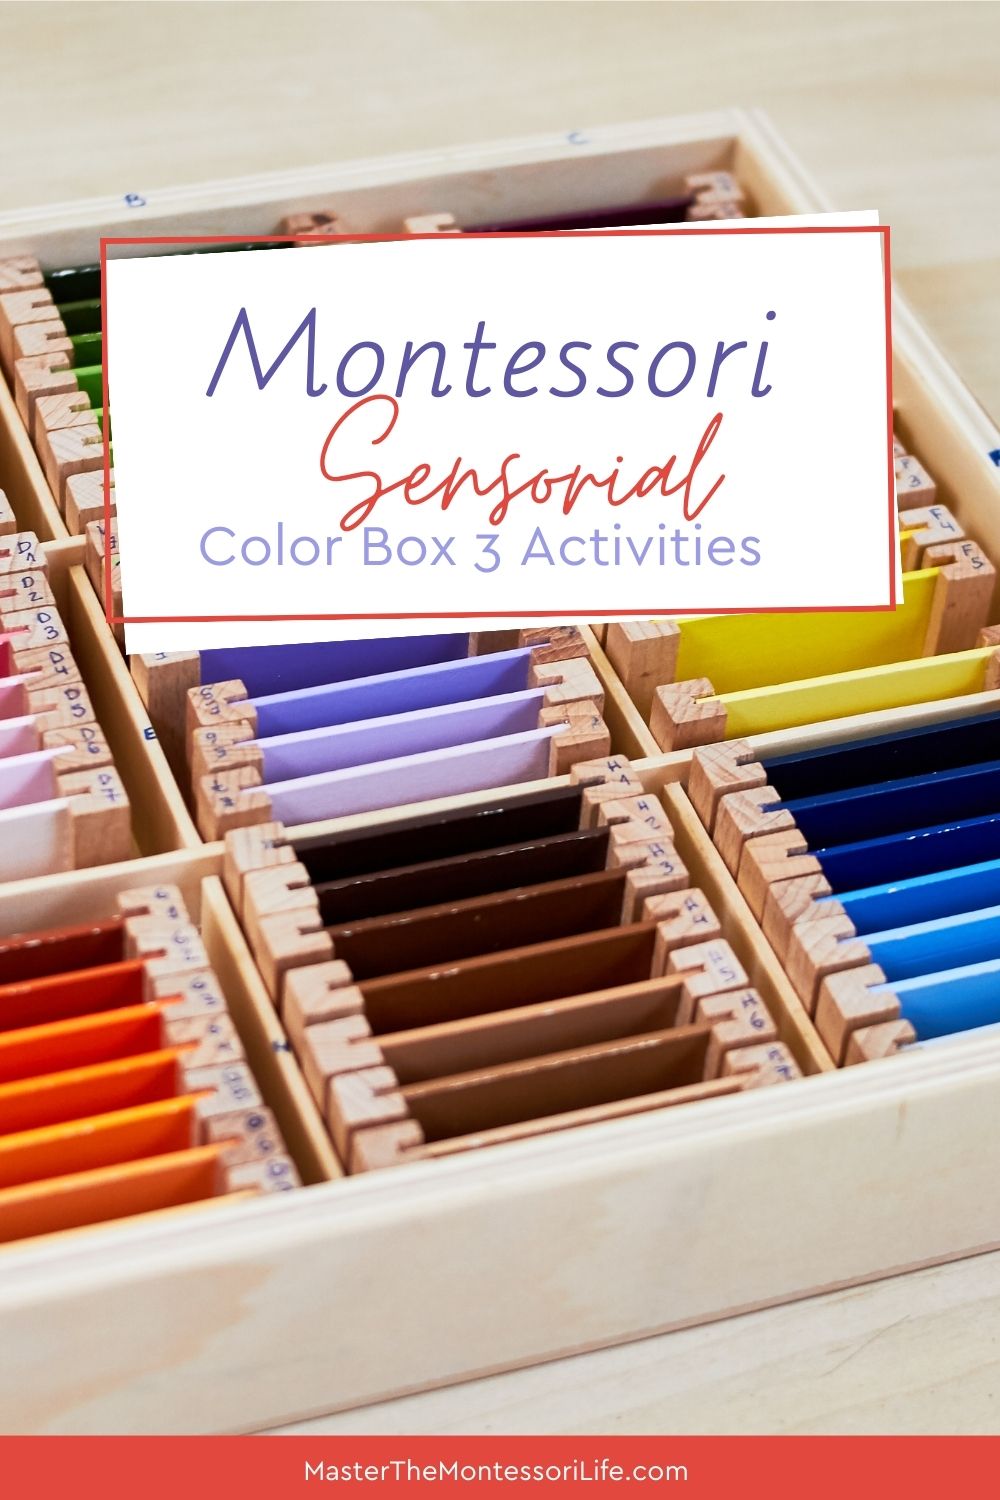 Montessori Sensorial Color Box 3 Activities